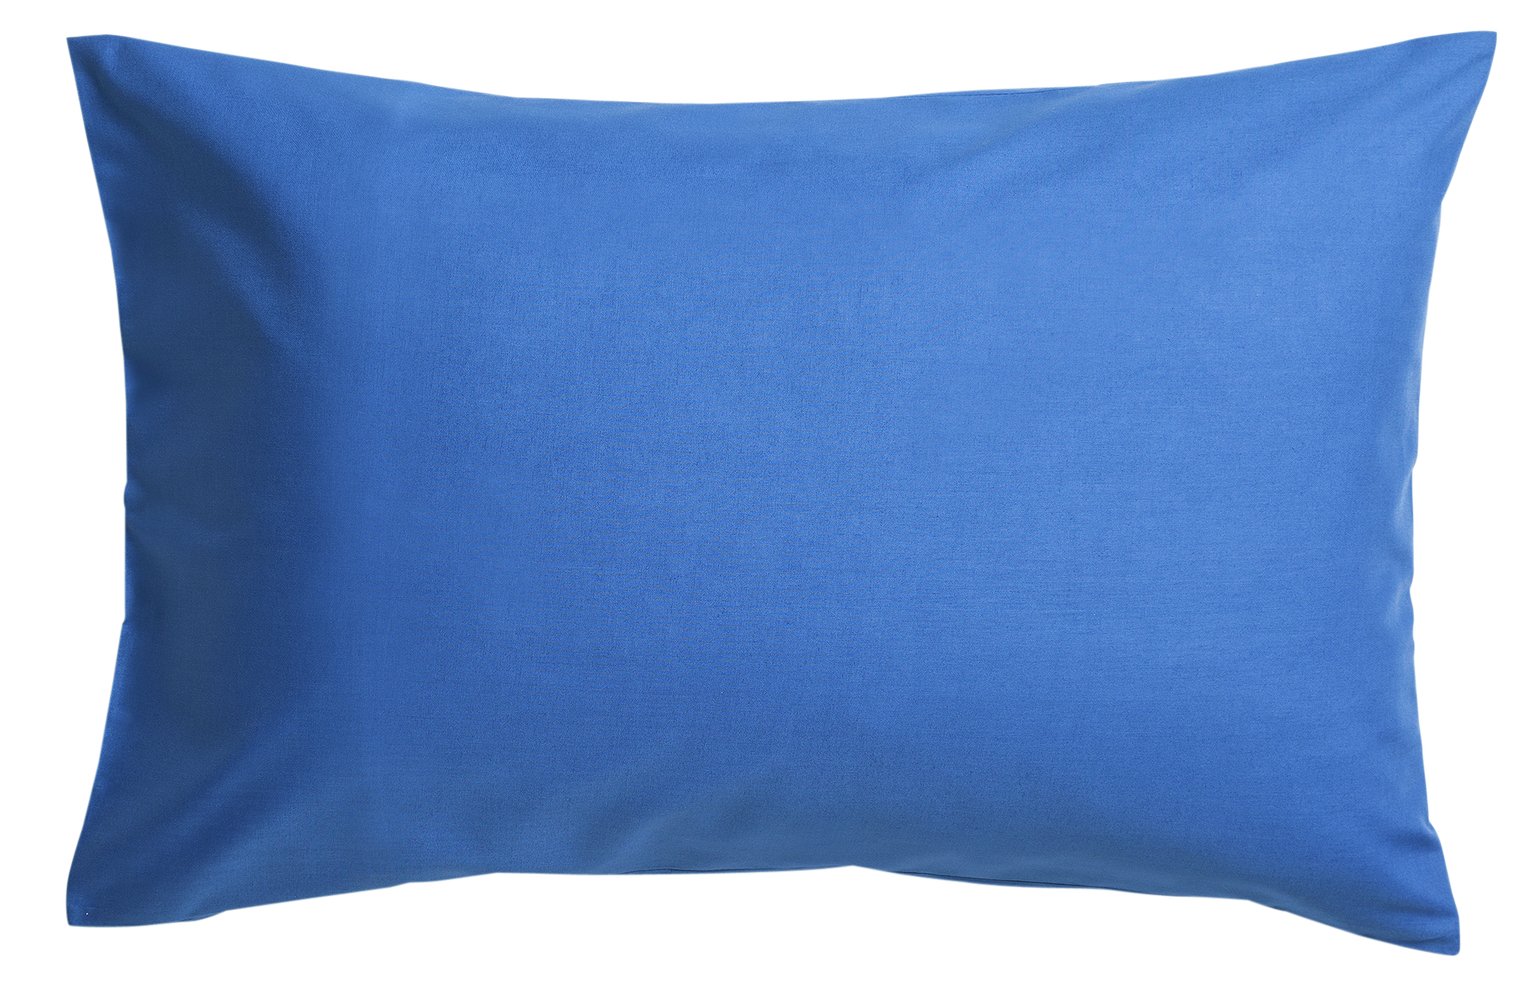 Habitat Easycare Polycotton Standard Pillowcase Pair